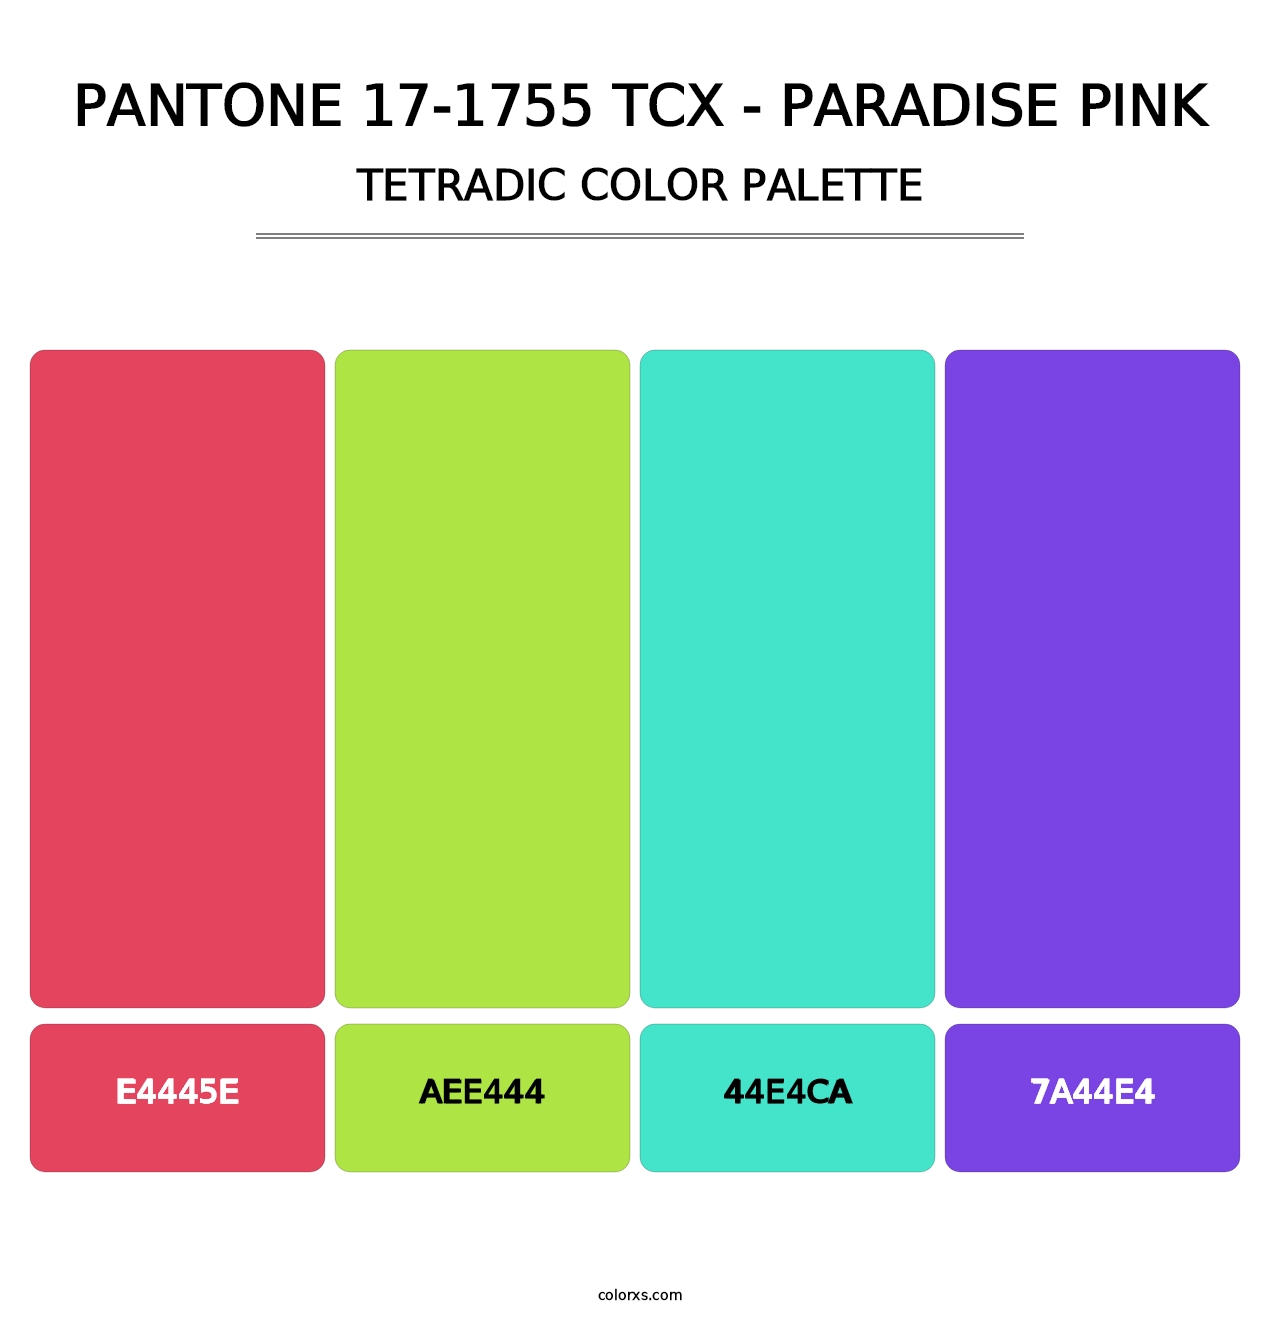 PANTONE 17-1755 TCX - Paradise Pink - Tetradic Color Palette